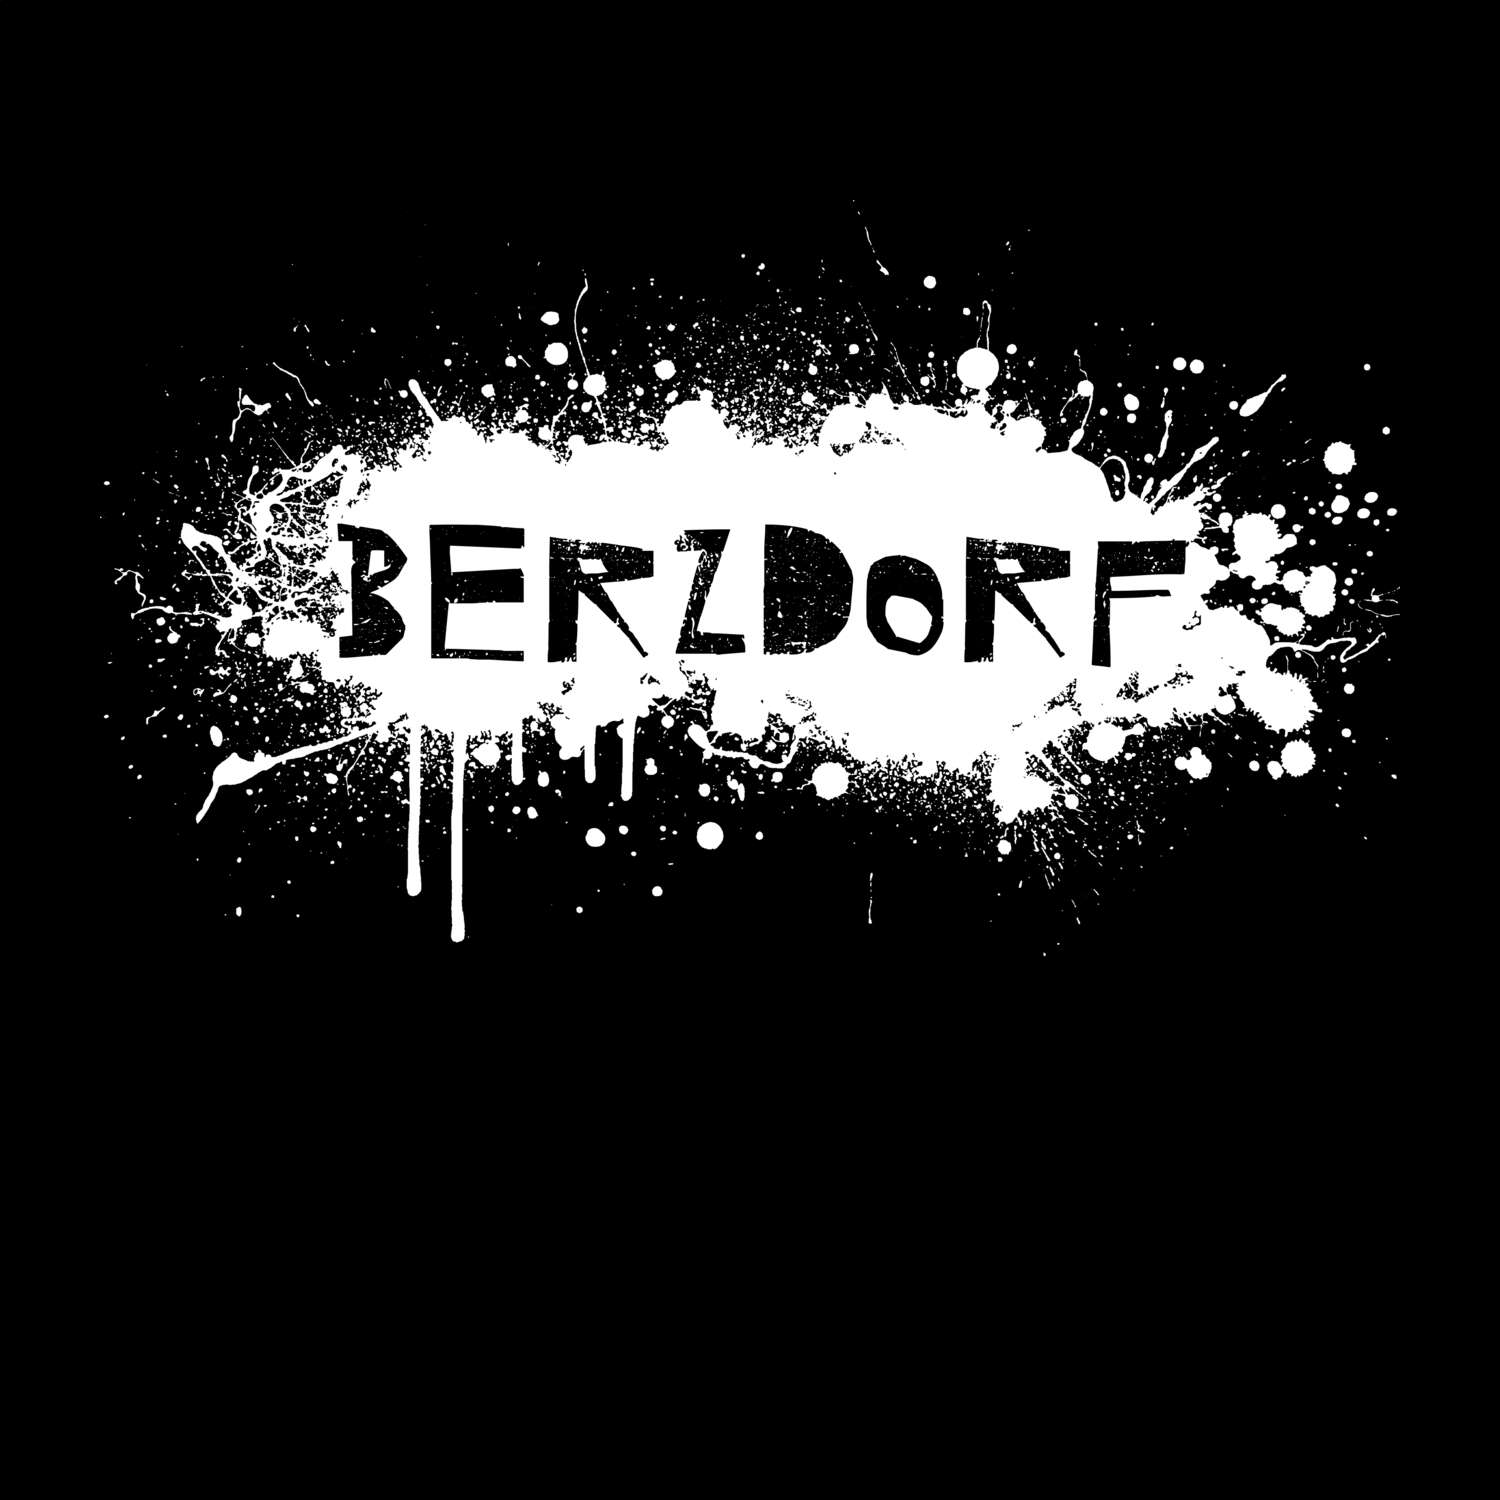 Berzdorf T-Shirt »Paint Splash Punk«